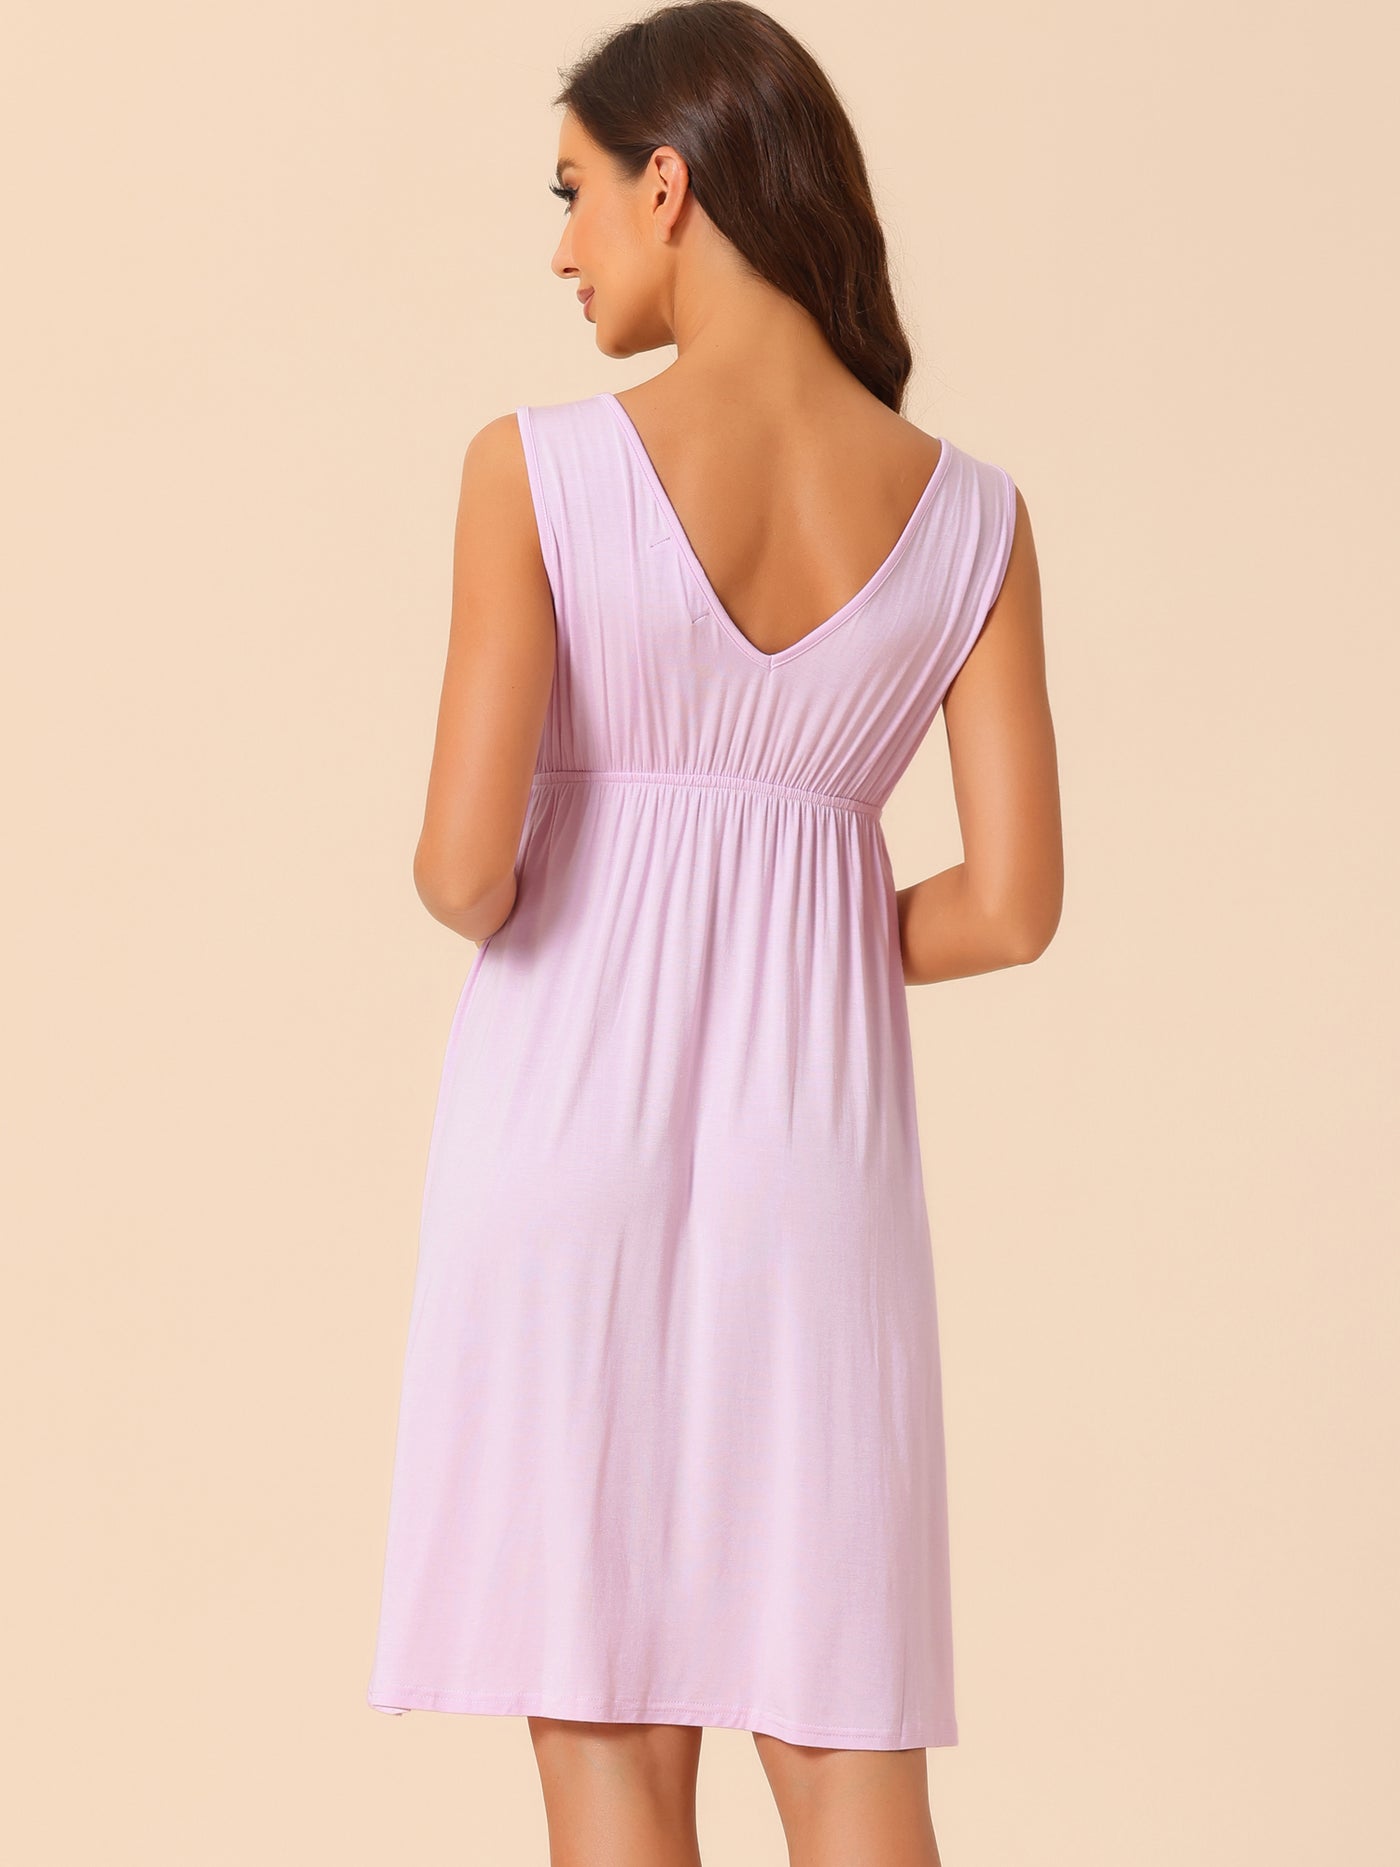 Bublédon Womens Sleeveless Pajamas V Neck Sleepwear Lace Trim Lounge Nightgowns